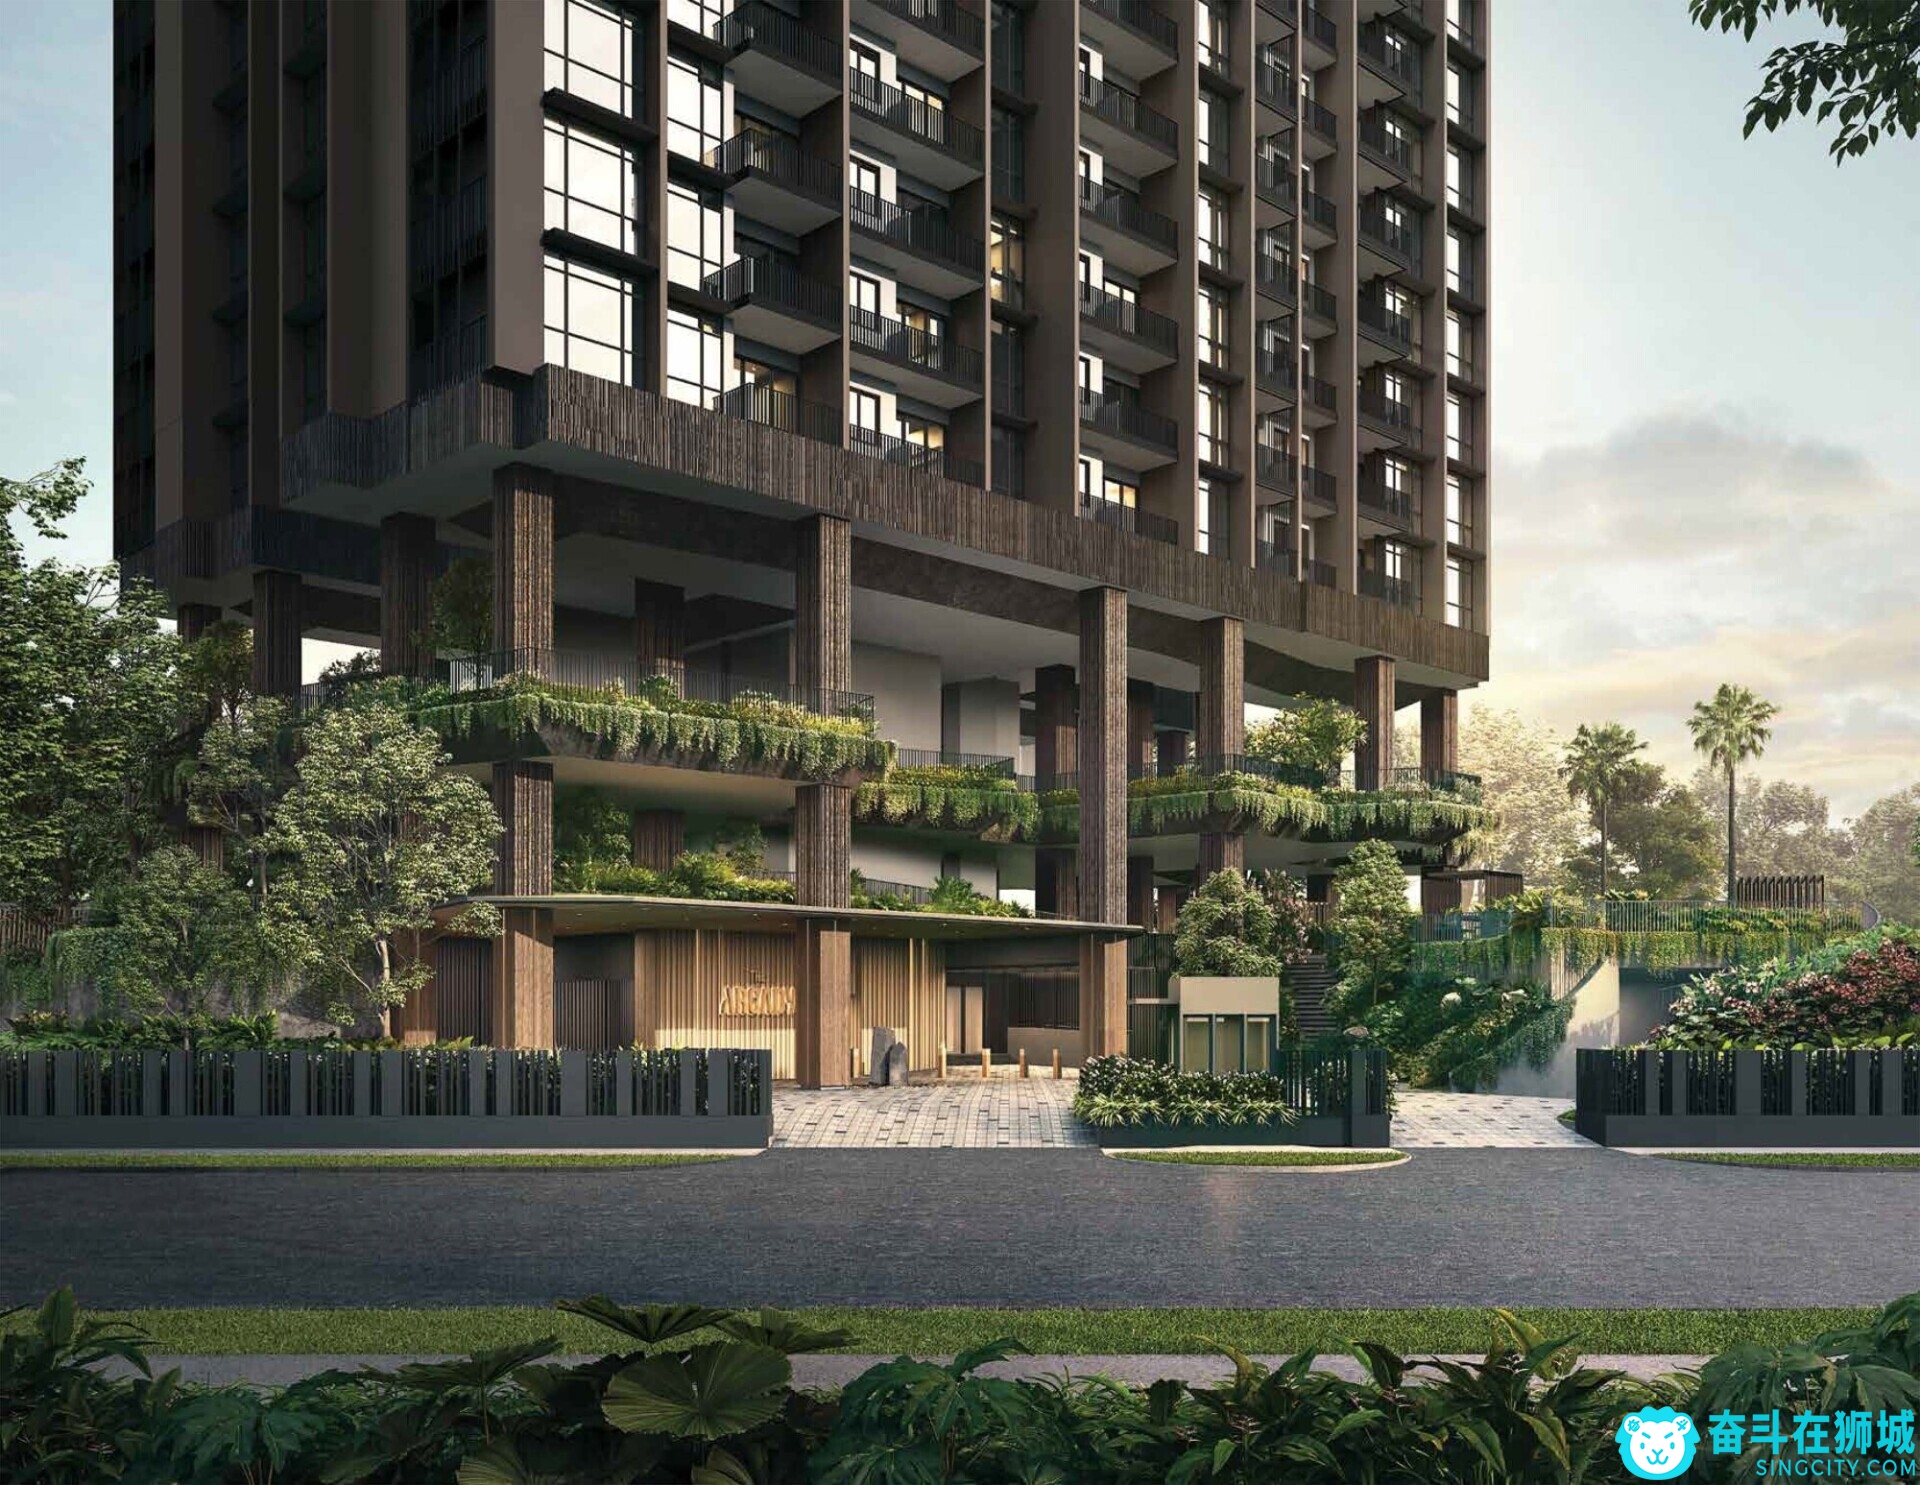 the-arcady-at-boon-keng-photo-singapore-new-launch-condominium-ac369dbbbd01a68d2.jpg